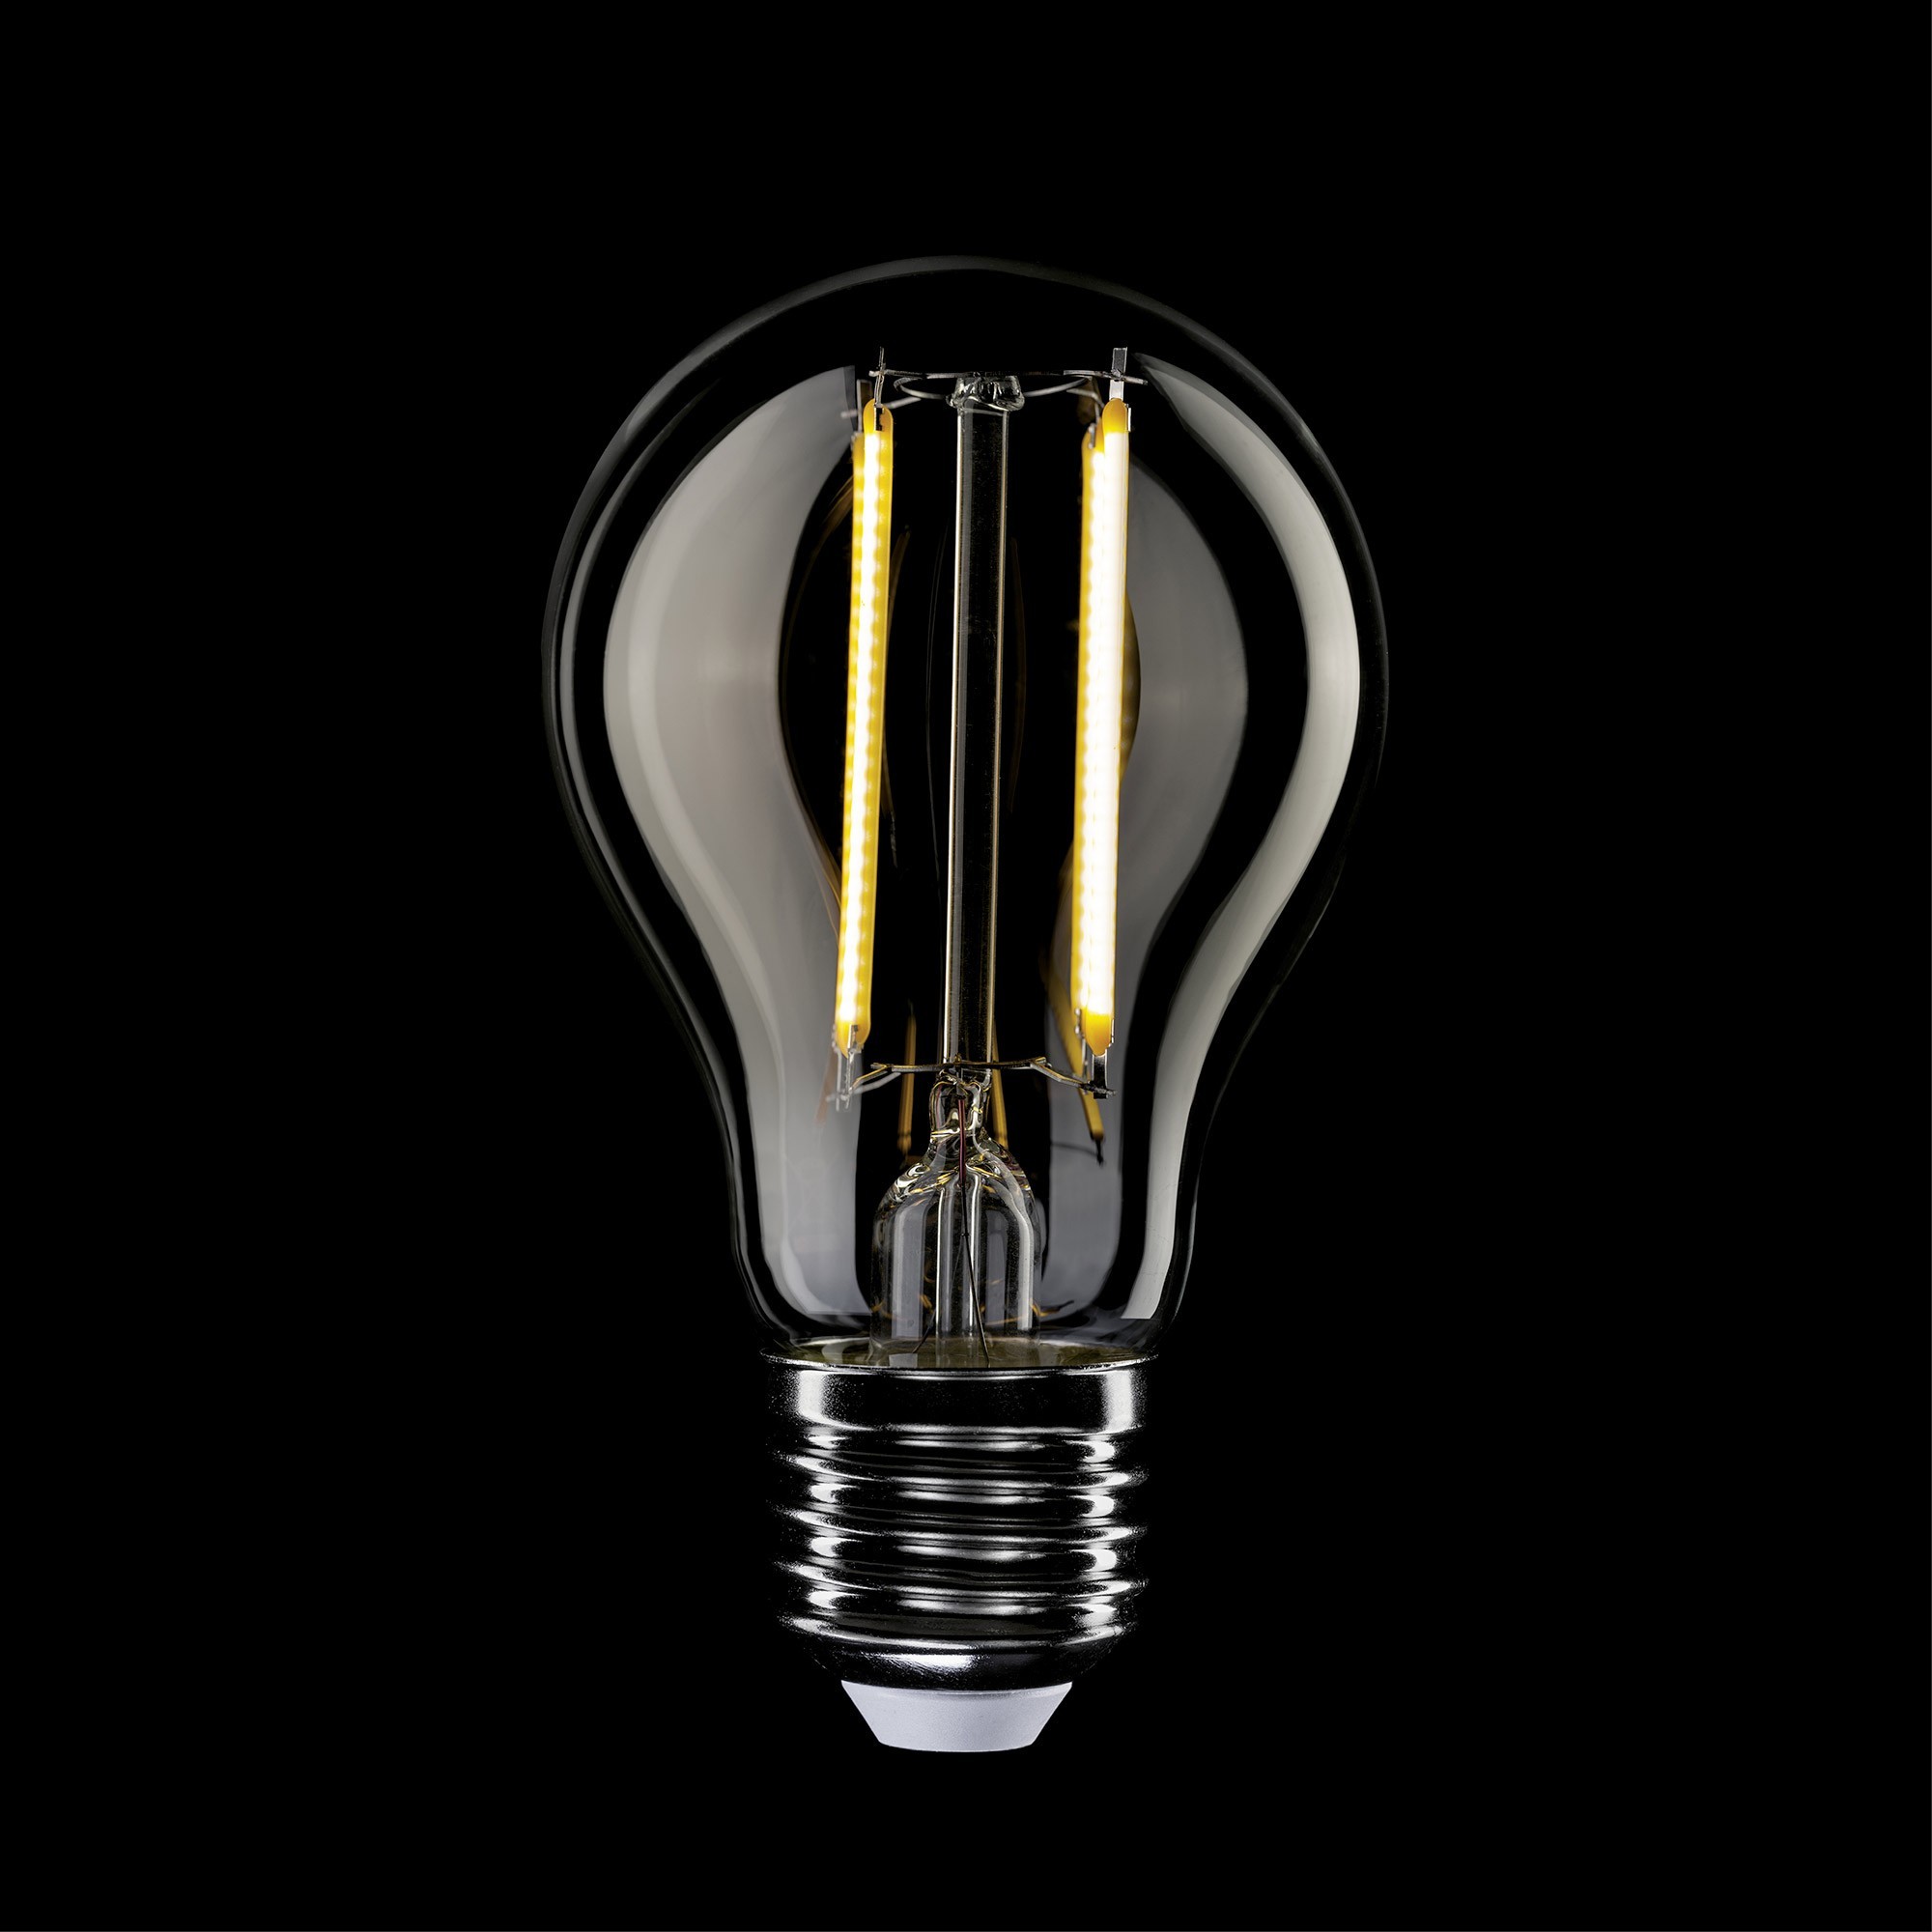 T01 - A60 LED Light Bulb, E27, 7W, 2700K, 806Lm, clear glass